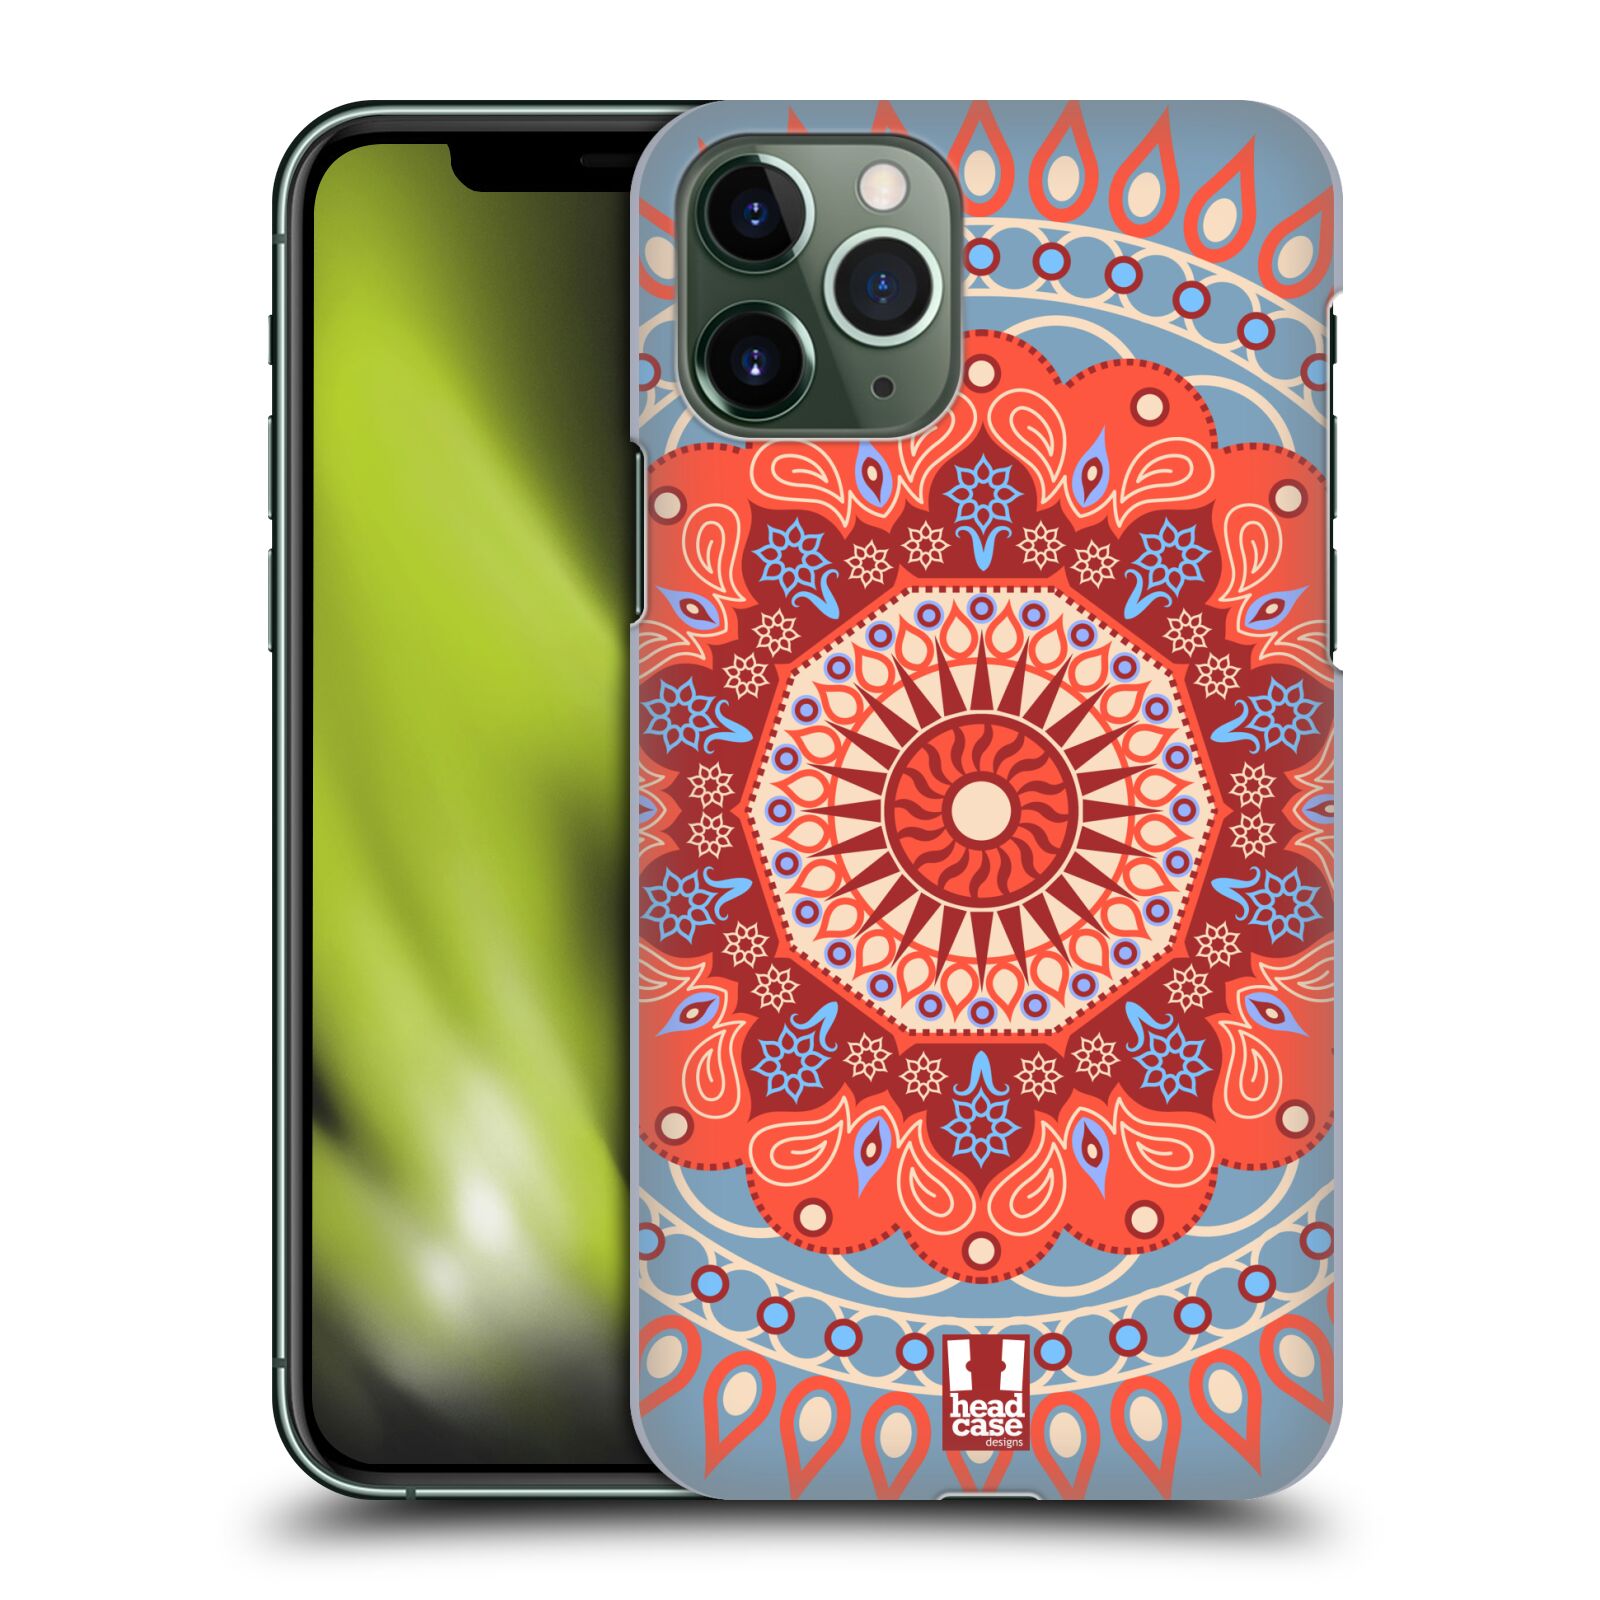 Pouzdro na mobil Apple Iphone 11 PRO - HEAD CASE - vzor Indie Mandala slunce barevný motiv ČERVENÁ A MODRÁ